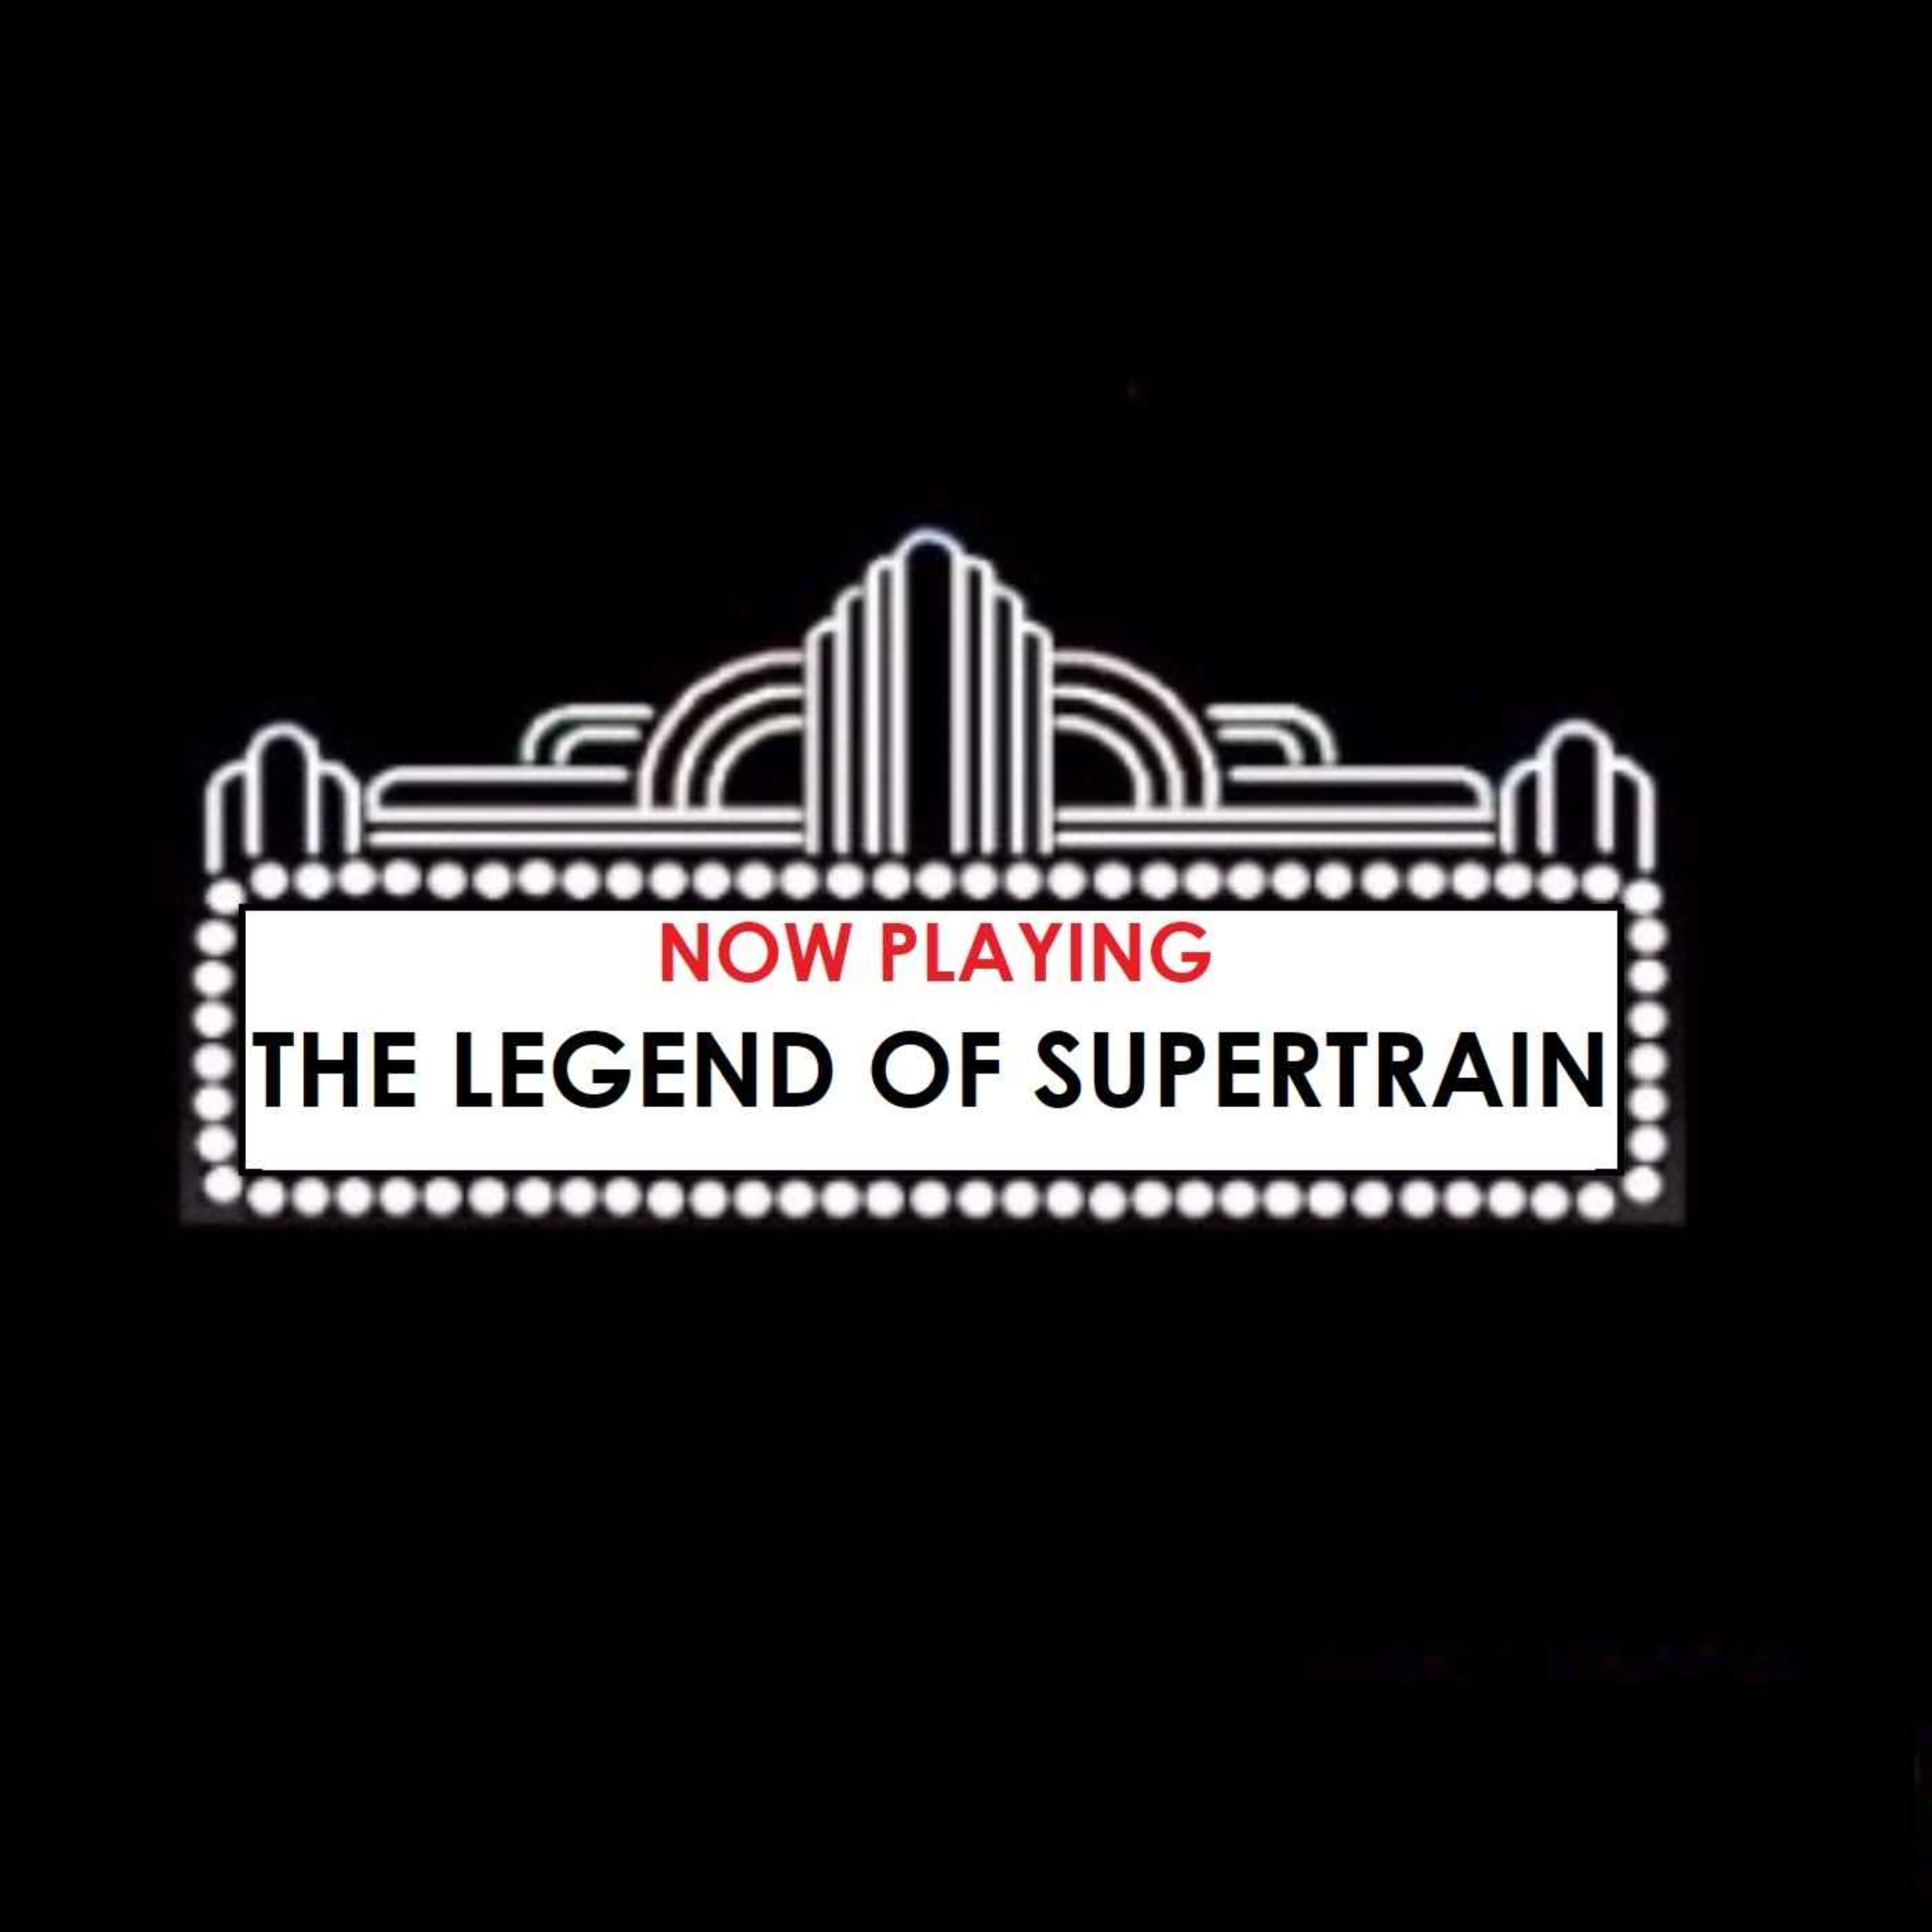 The Legend of Supertrain